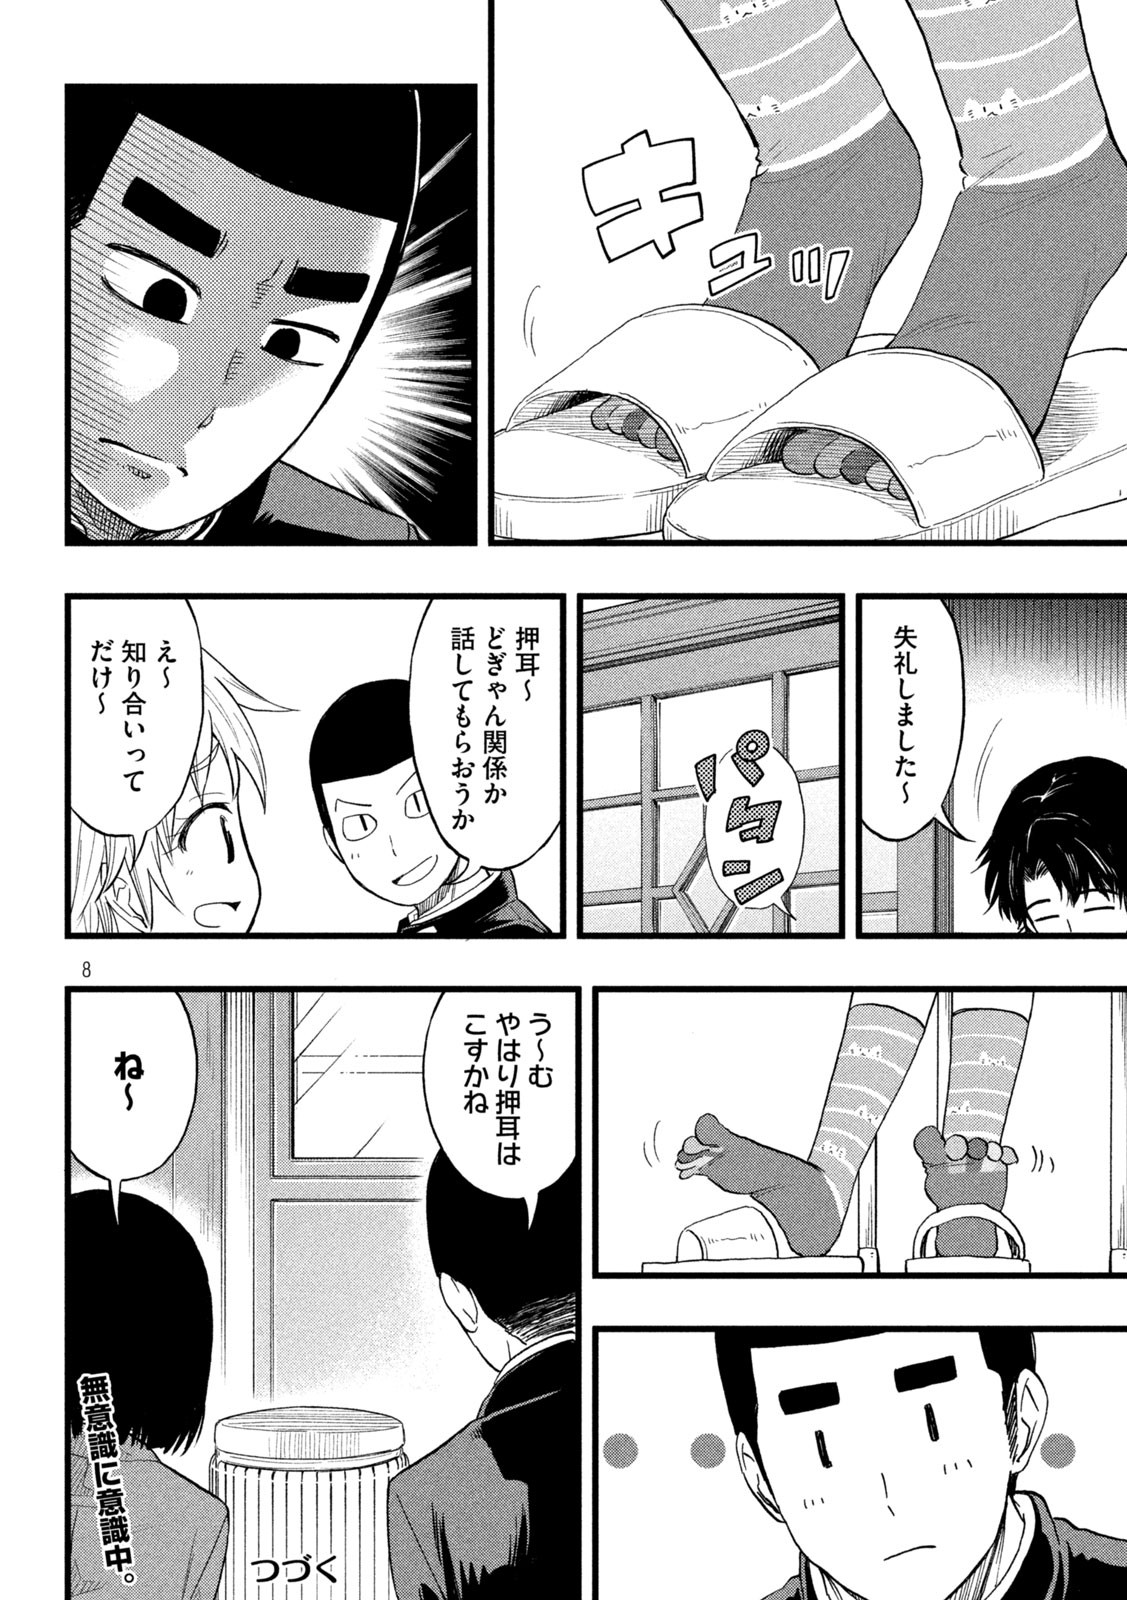 Koharu haru! - Chapter 71 - Page 4